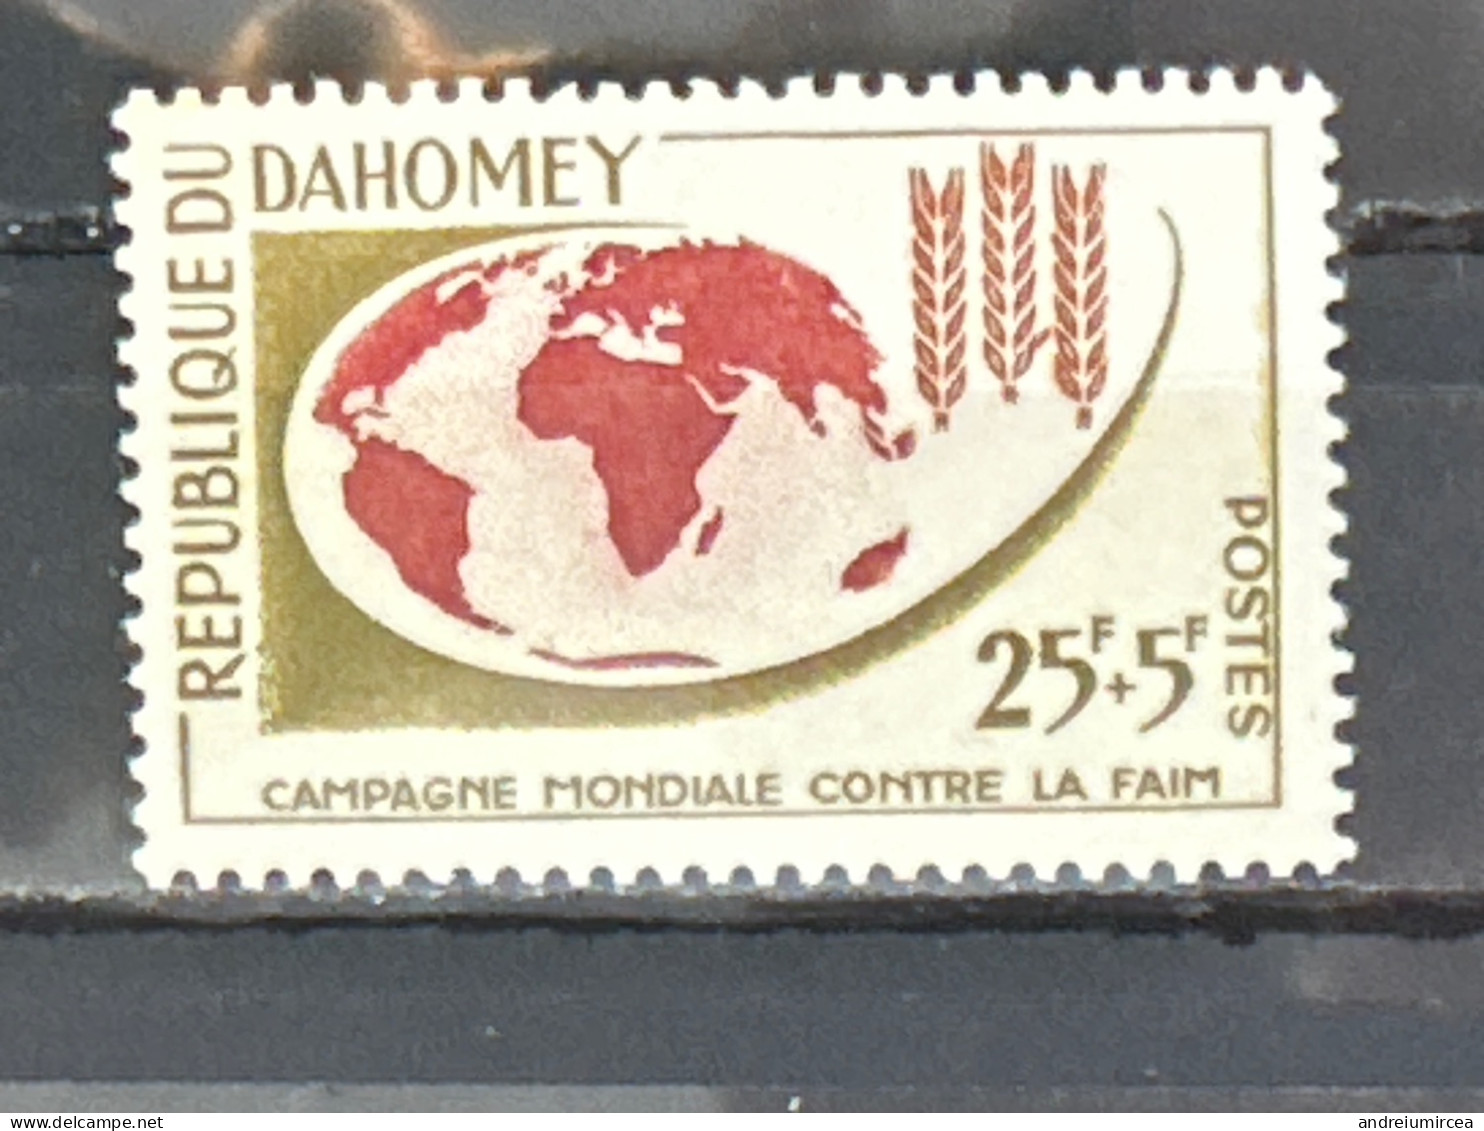 Dahomey MNH 1963 Campagne Mondiale Contre La Faim - Benin - Dahomey (1960-...)